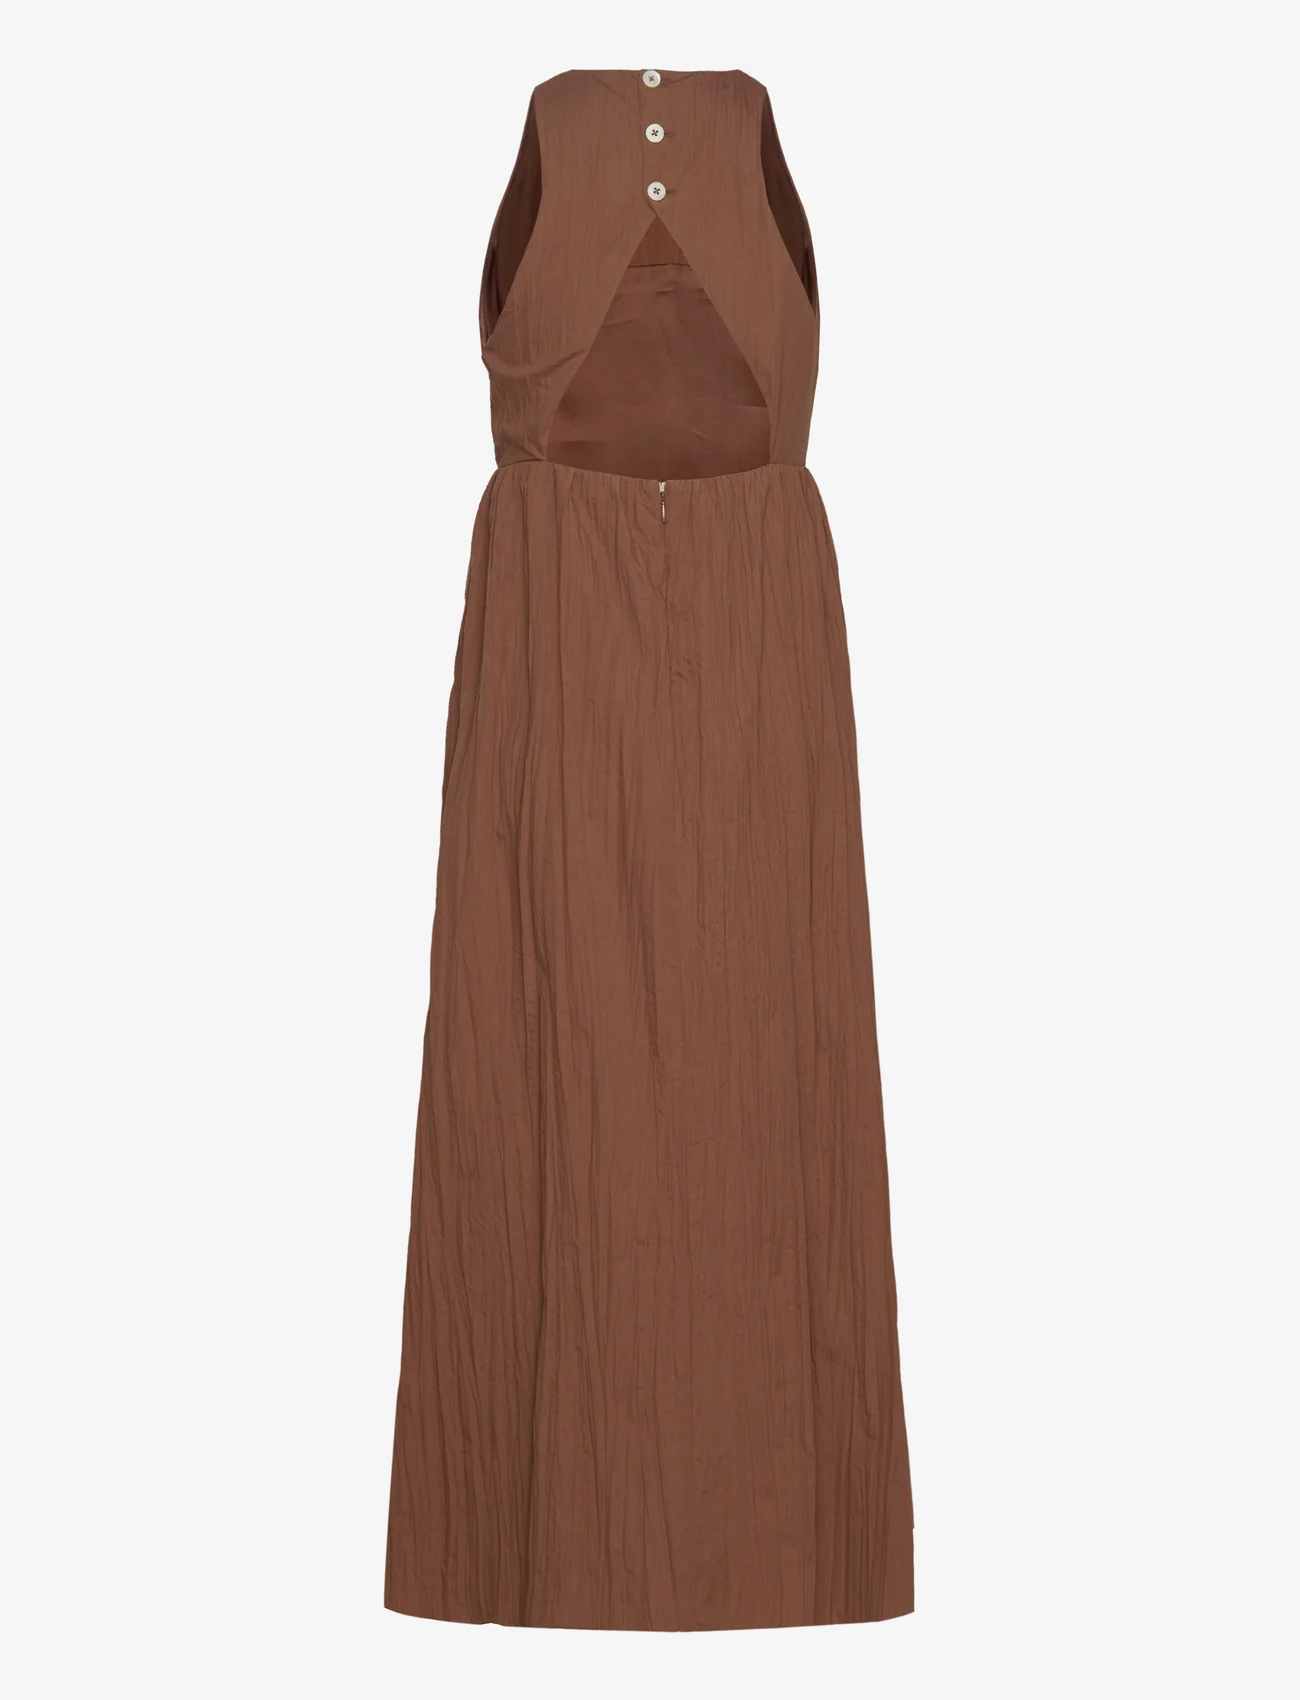 Hope - Cut-Out Dress - maxi sukienki - camel beige crinkled - 1